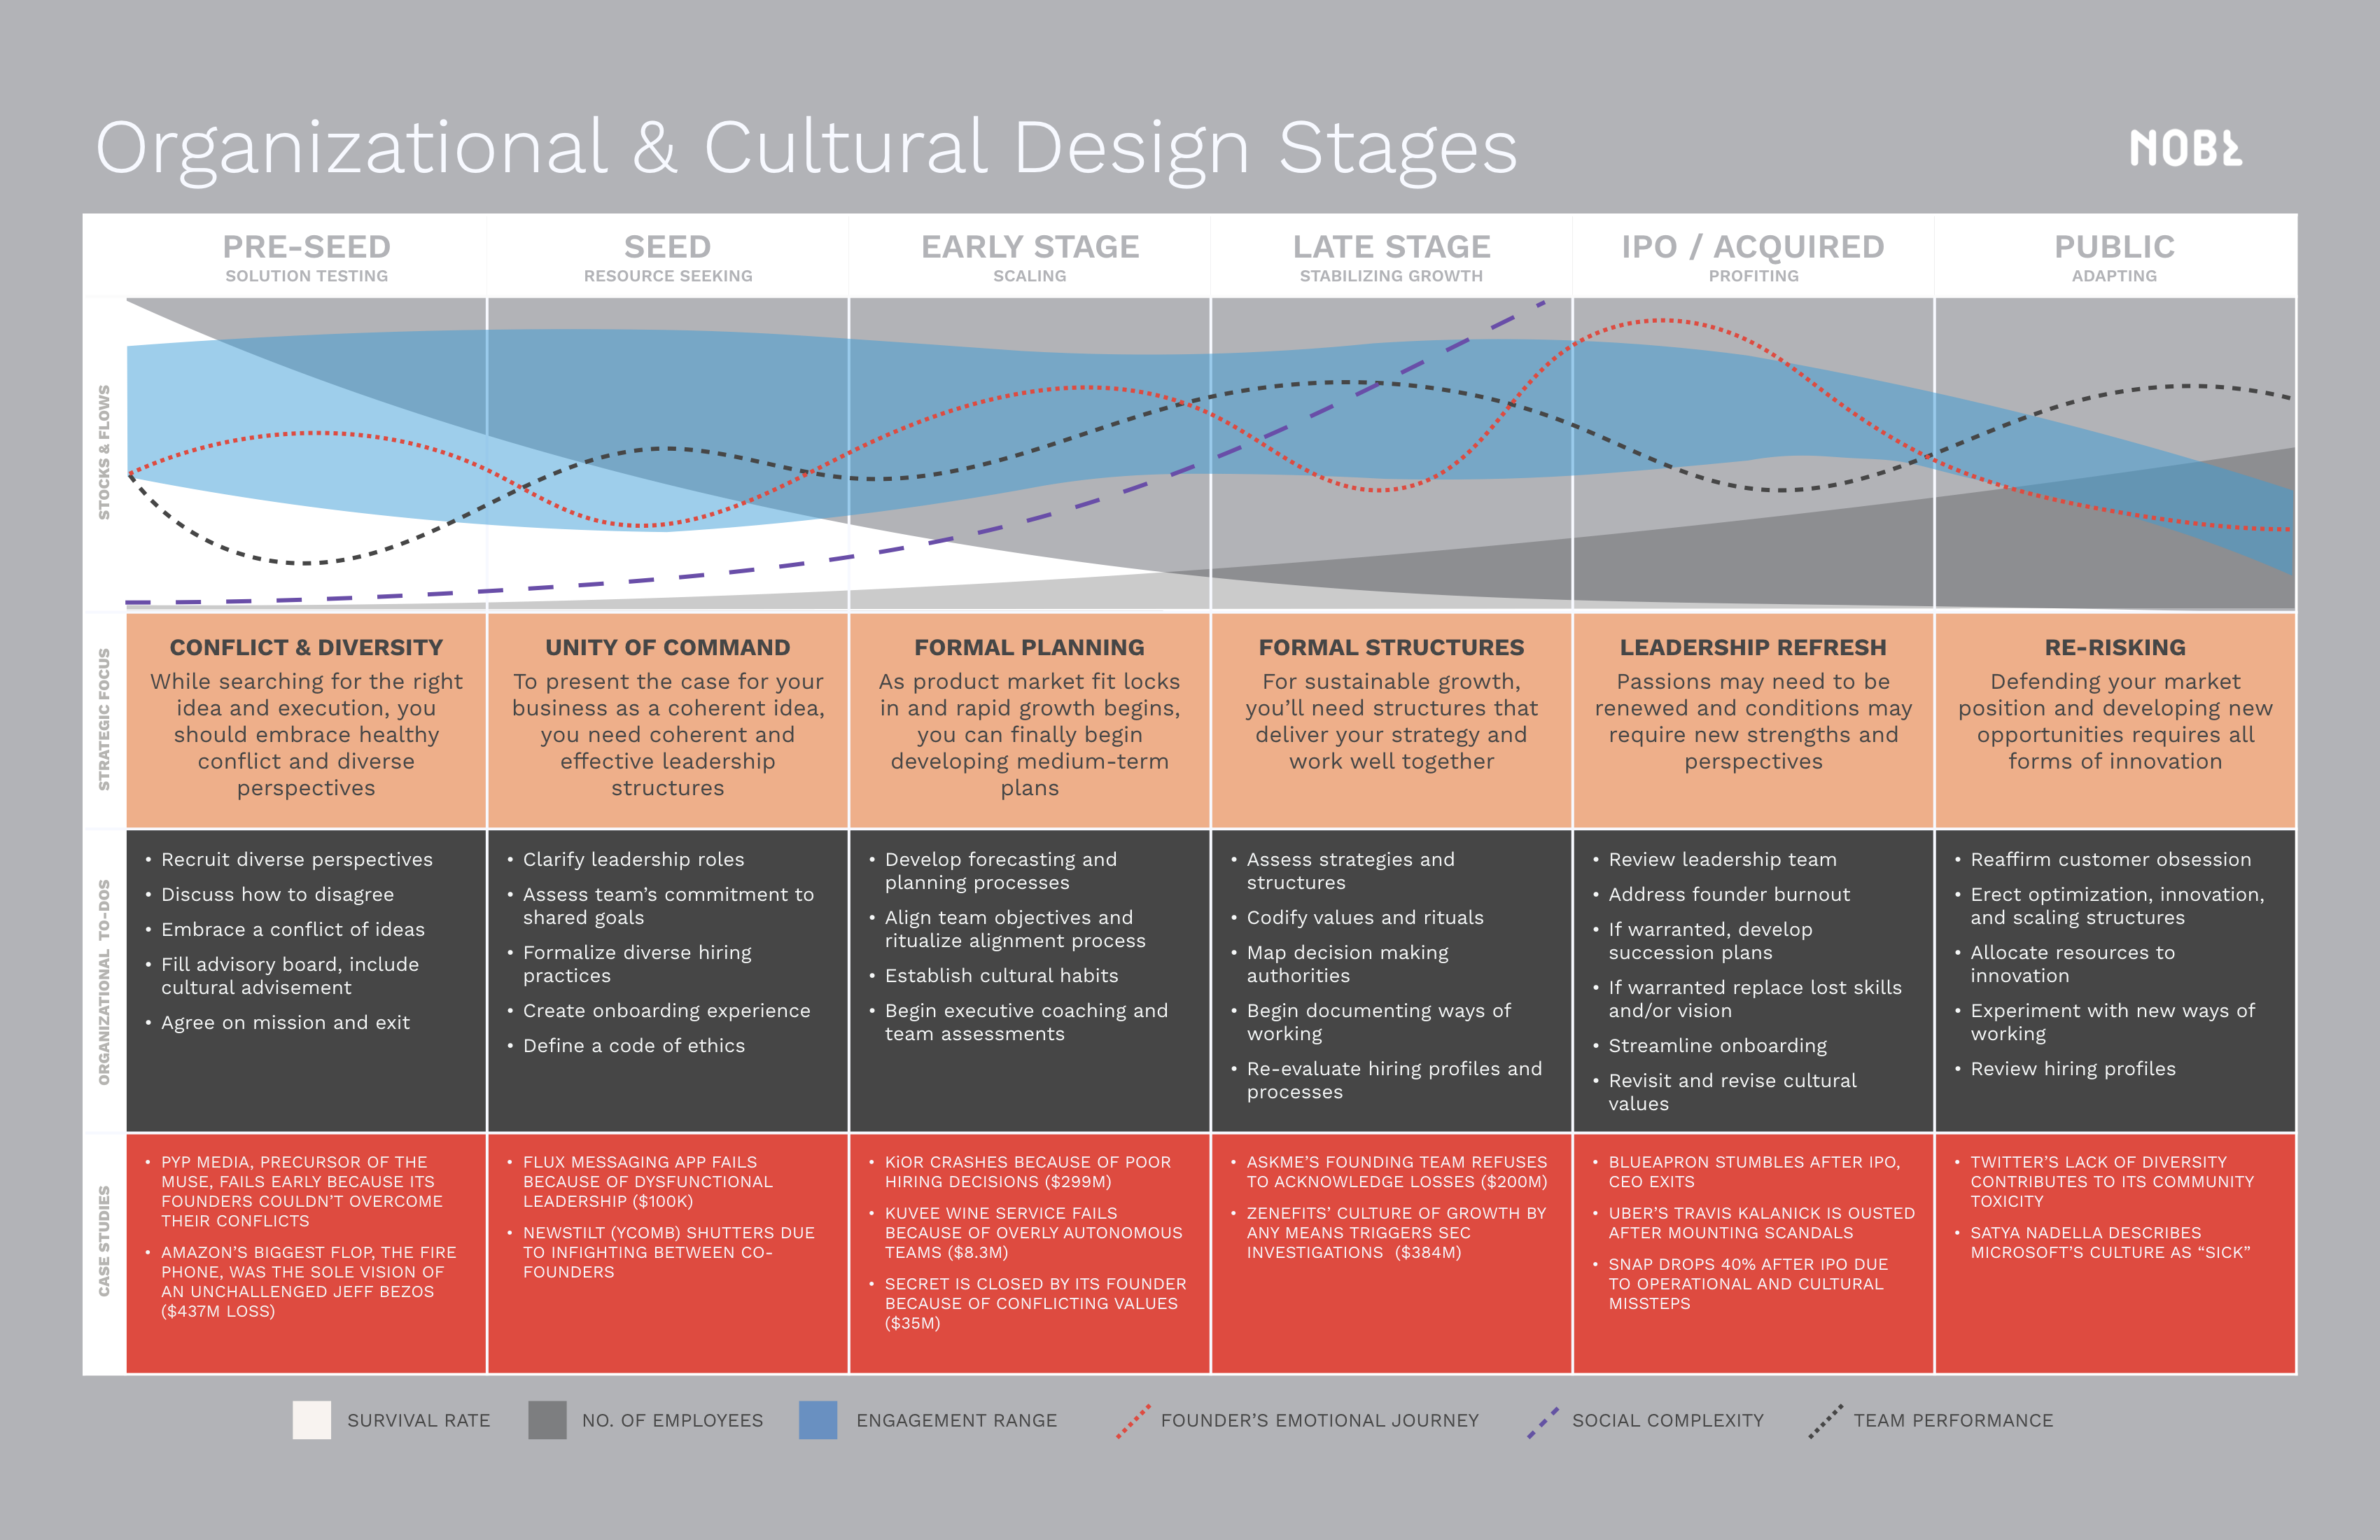 Organizational Design. Stages of Organizational growth. Framework управление изменениями. Growth and Development Stages. Forecast planning